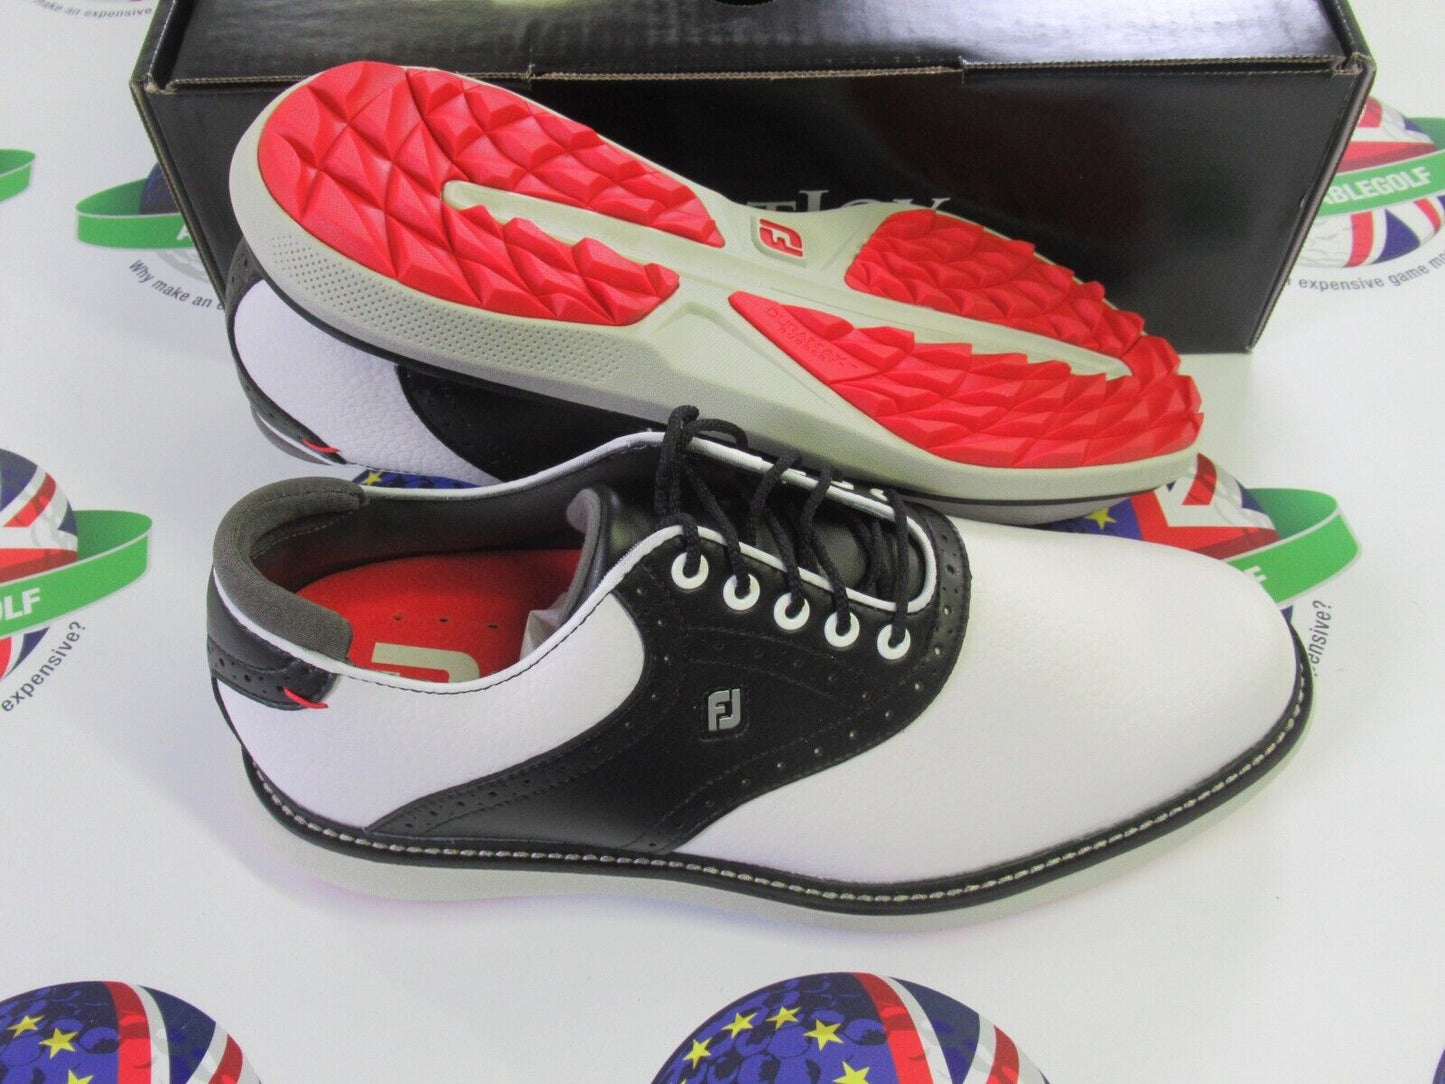 footjoy traditions waterproof golf shoes 57924k white/black uk size 11 medium